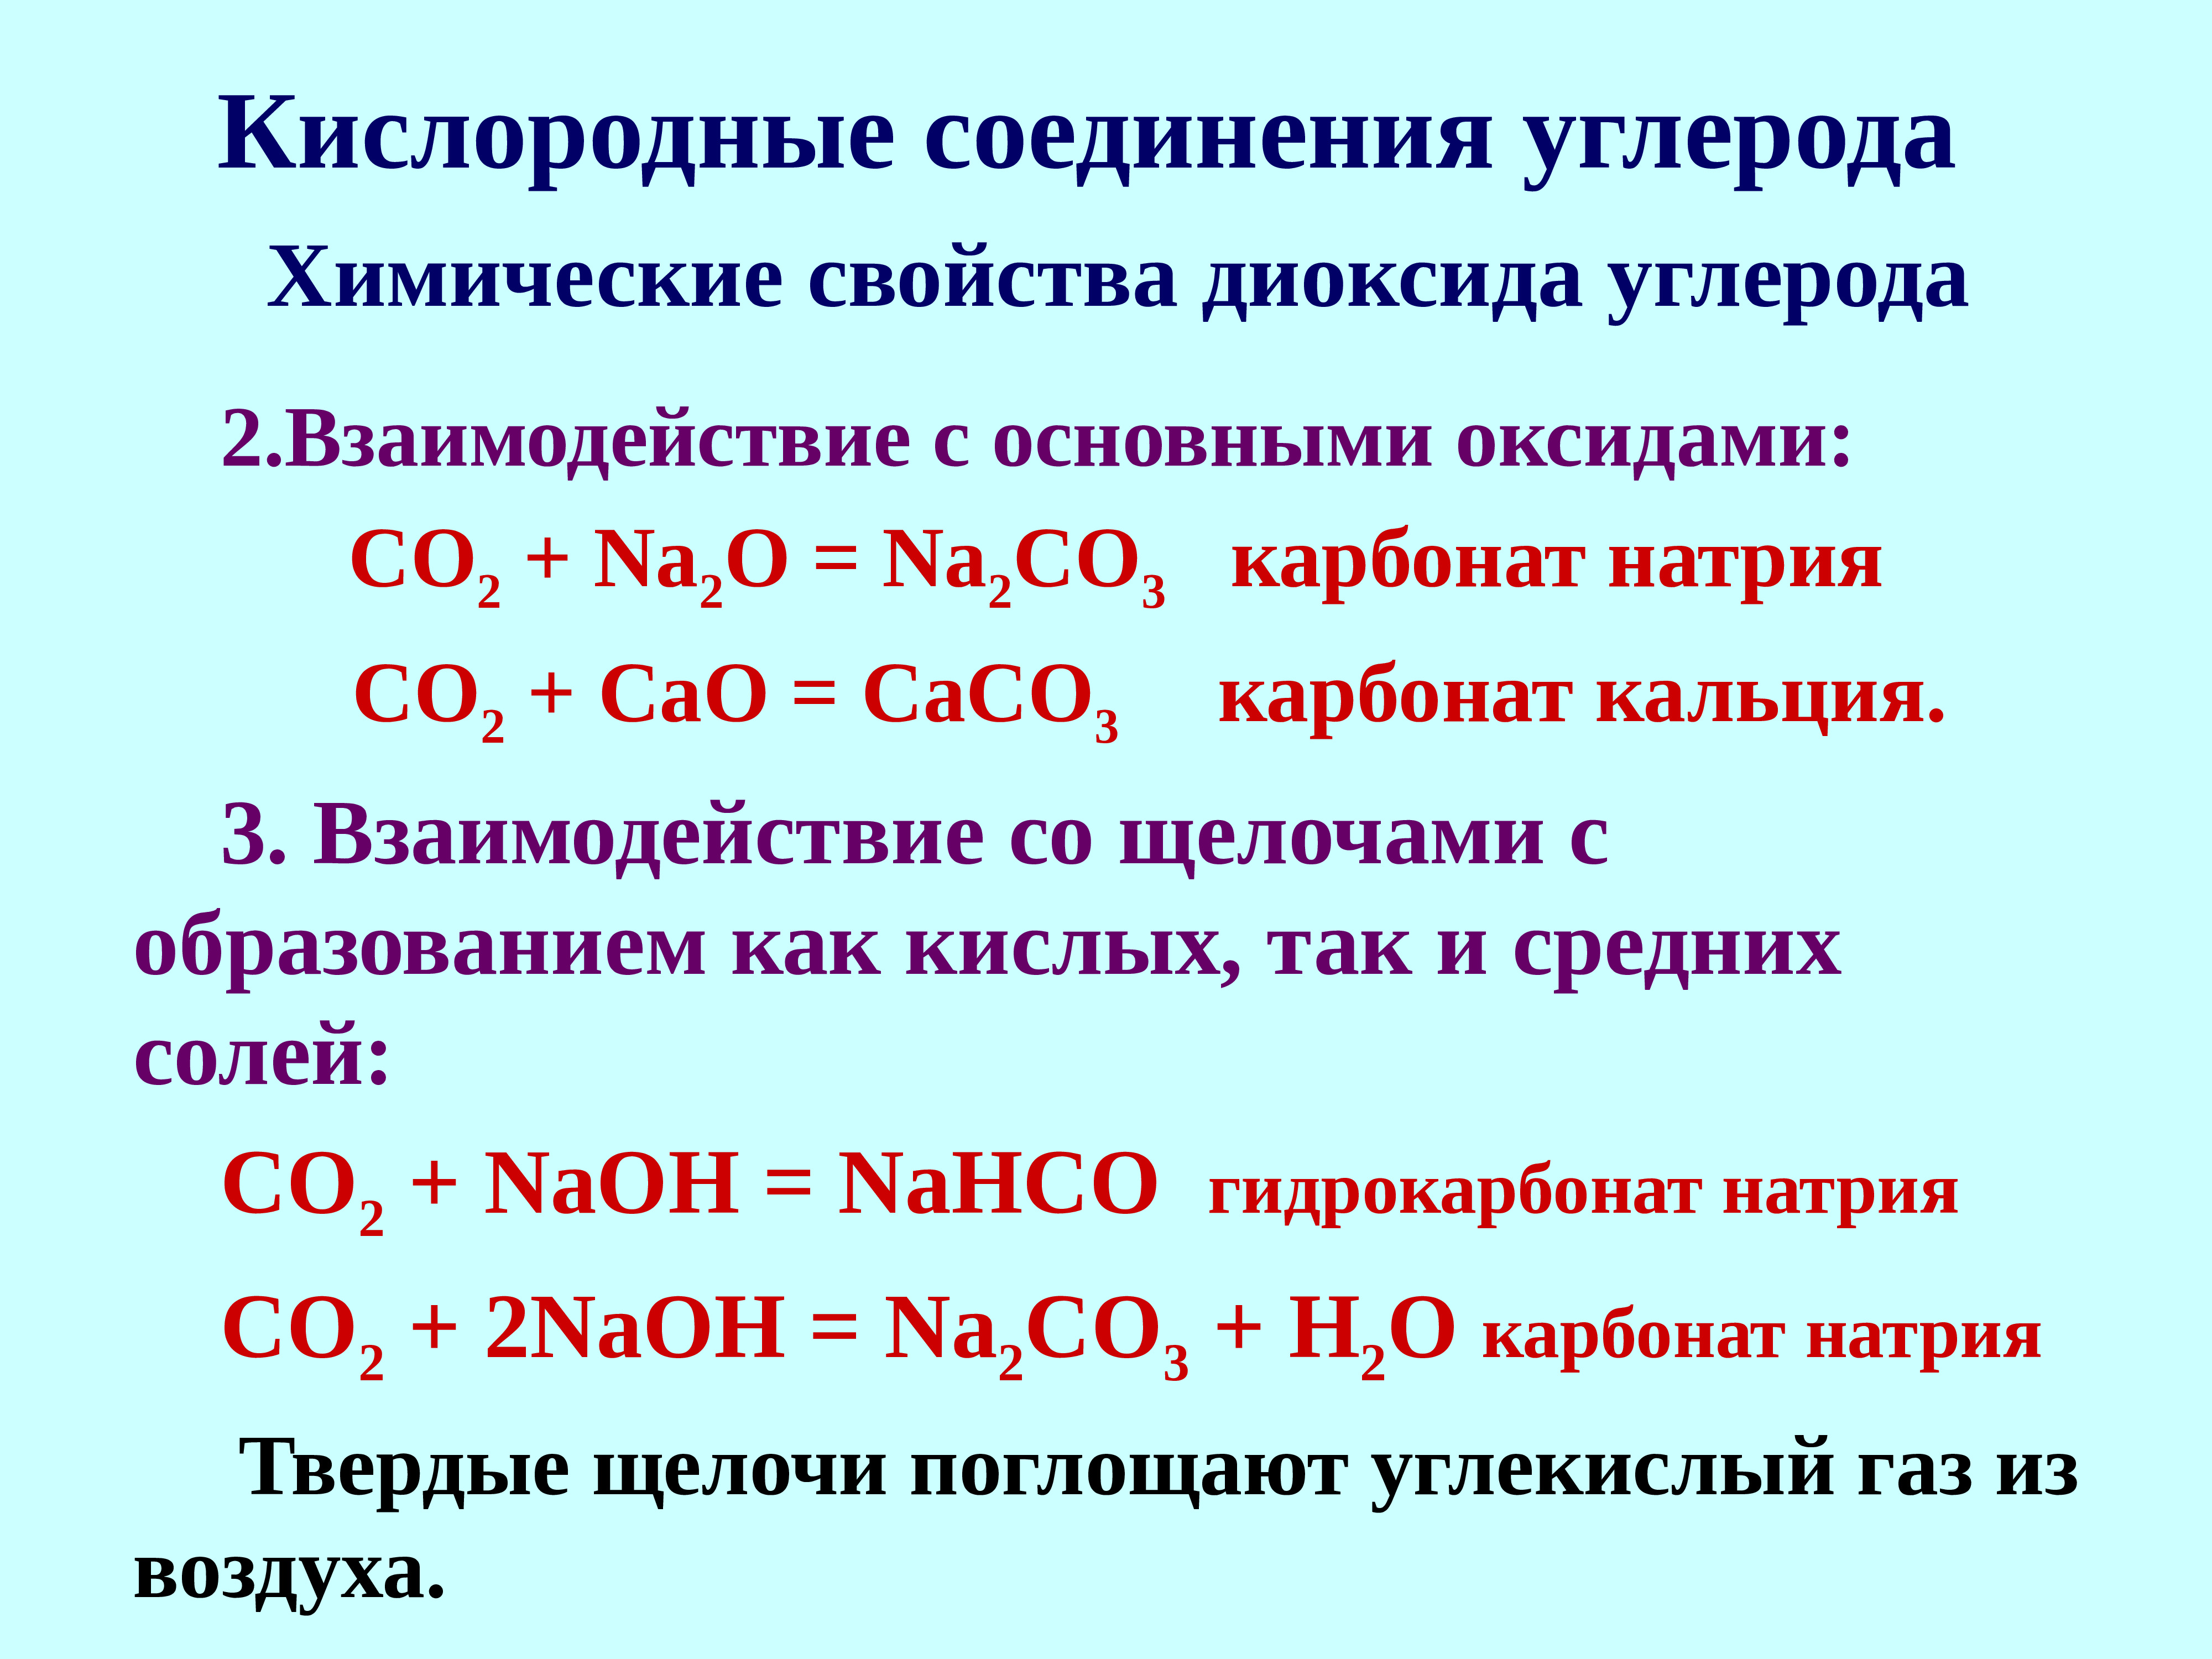 Гидрокарбонат кальция и карбонат калия. Кислородные соединения. Кислородные соединения углерода. Карбонат кальция в гидрокарбонат кальция. Карбонат кальция и углекислый ГАЗ.